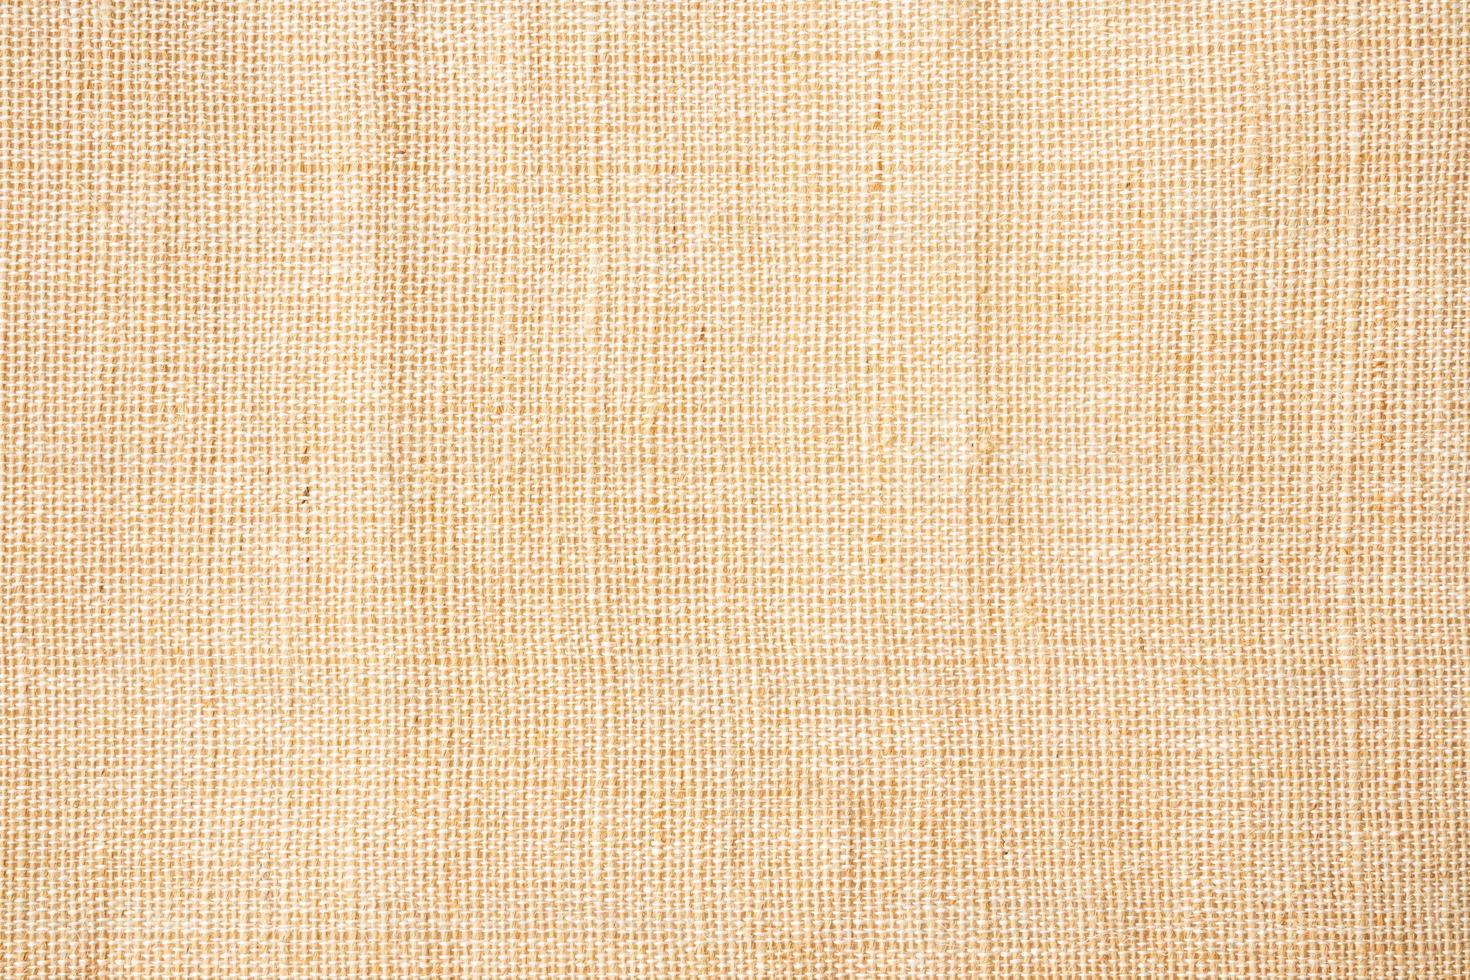 linen canvas fabric texture background photo